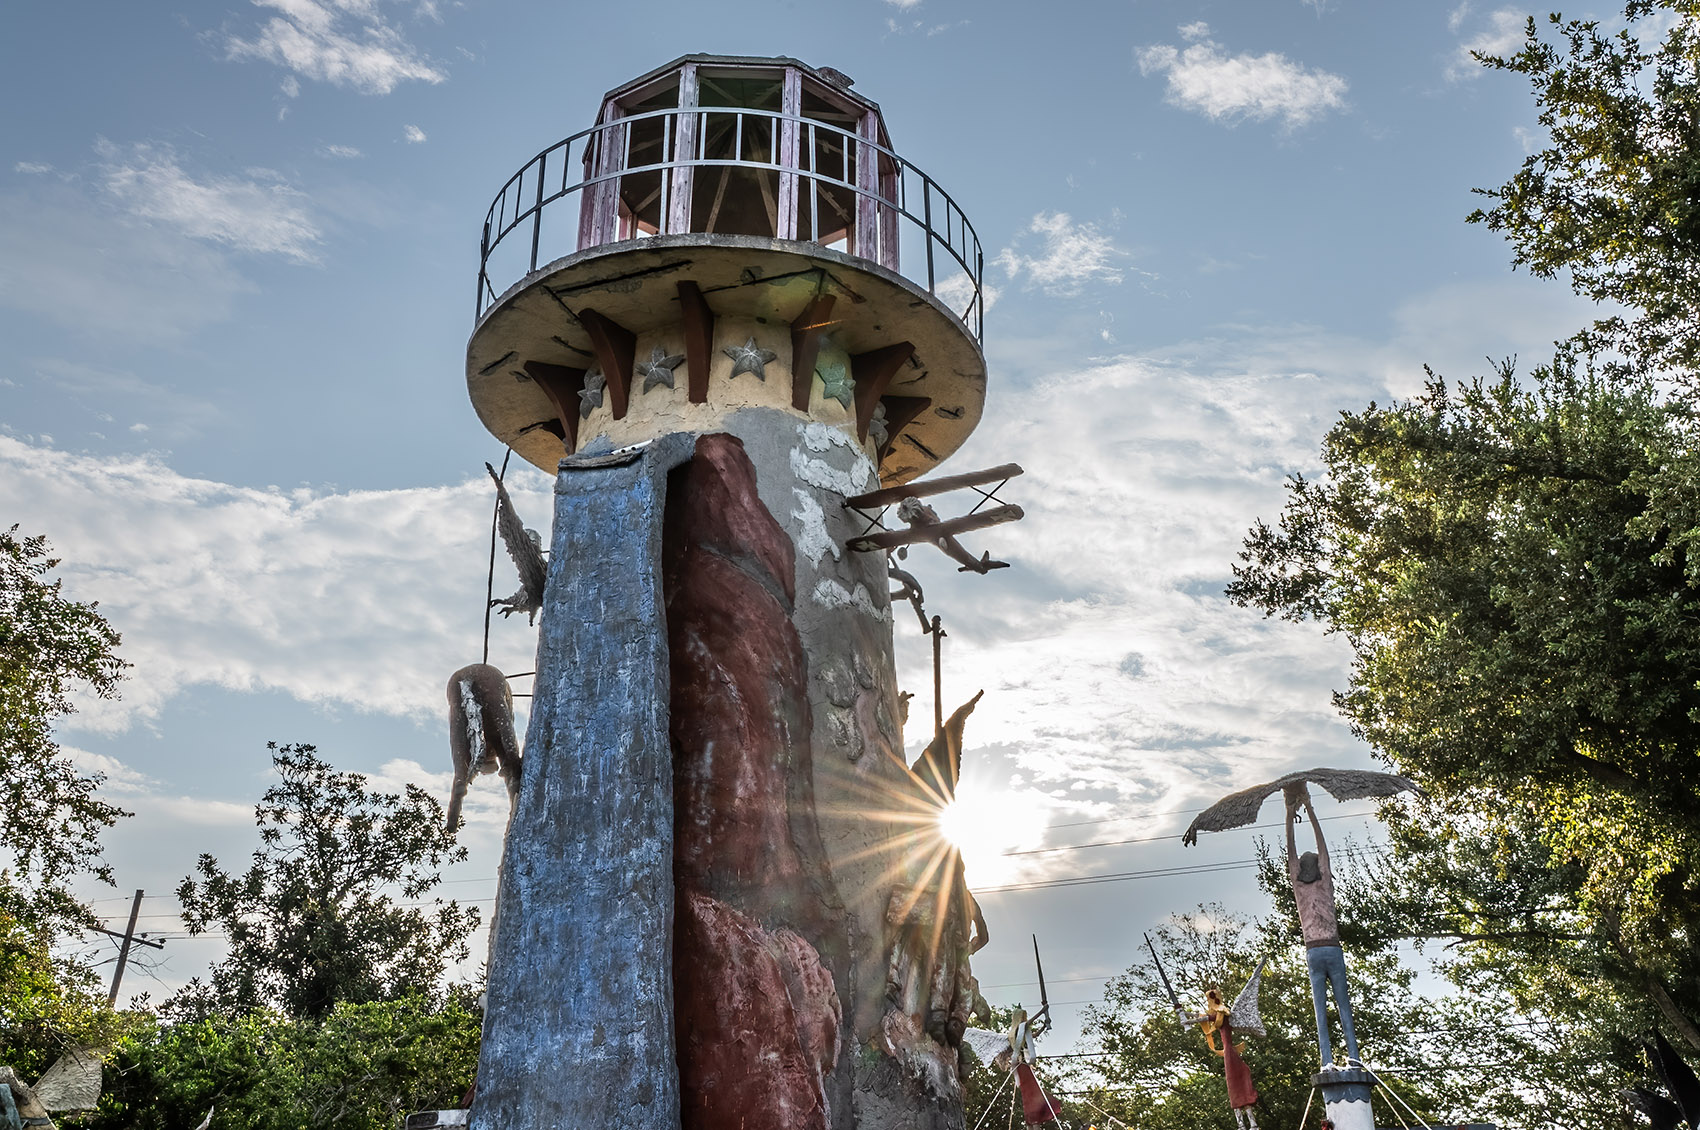 Decorated lighthouse in sculpture garden with sunburst